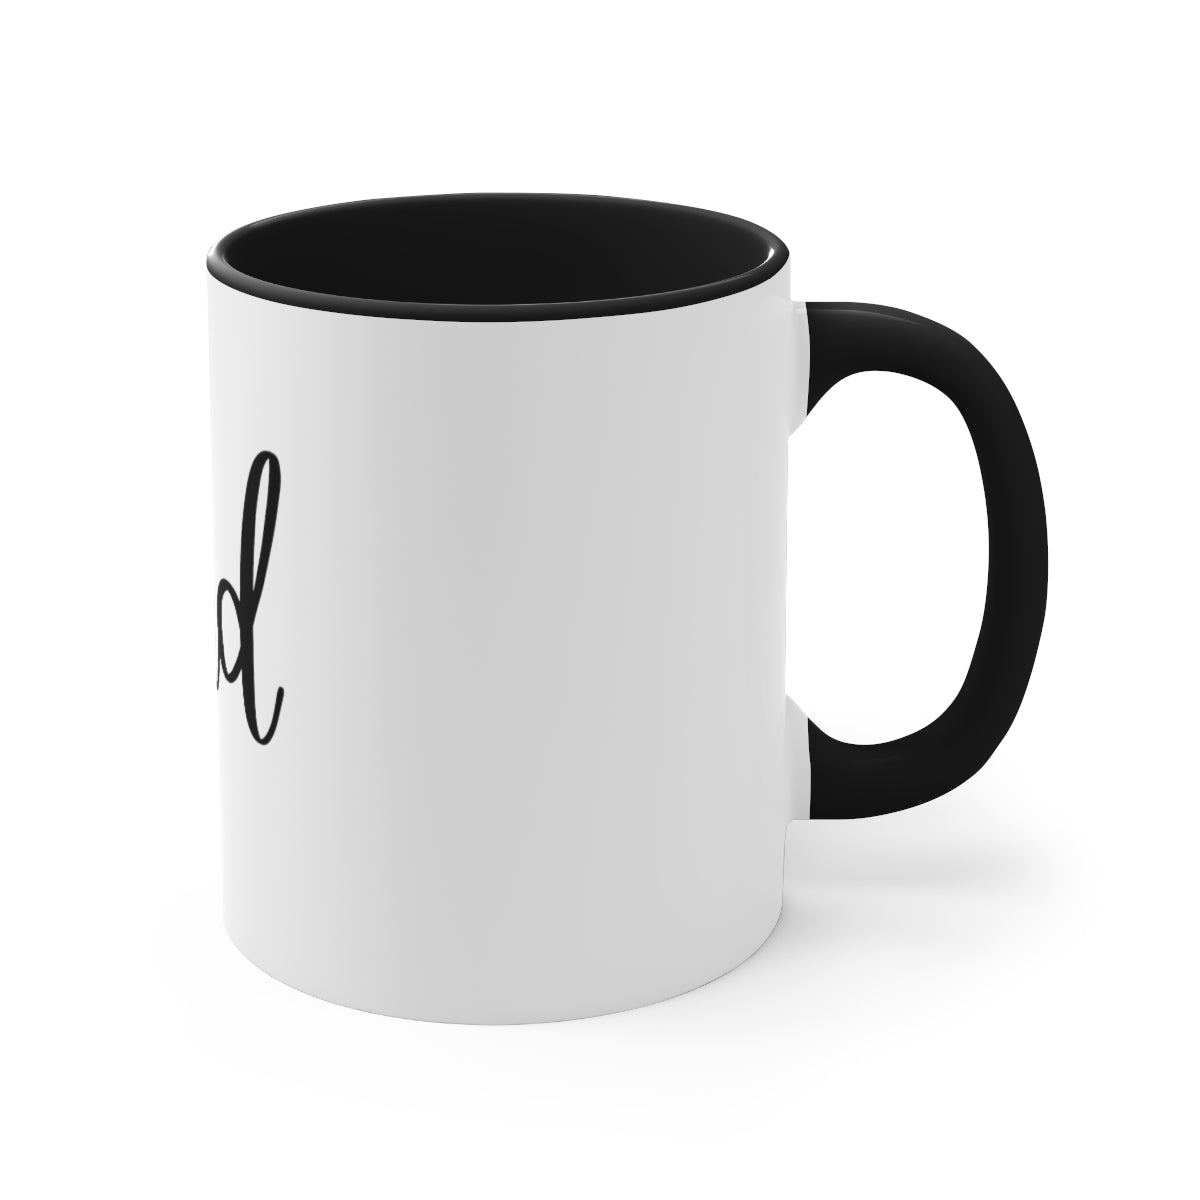 'And' Accent Coffee Mug, 11oz